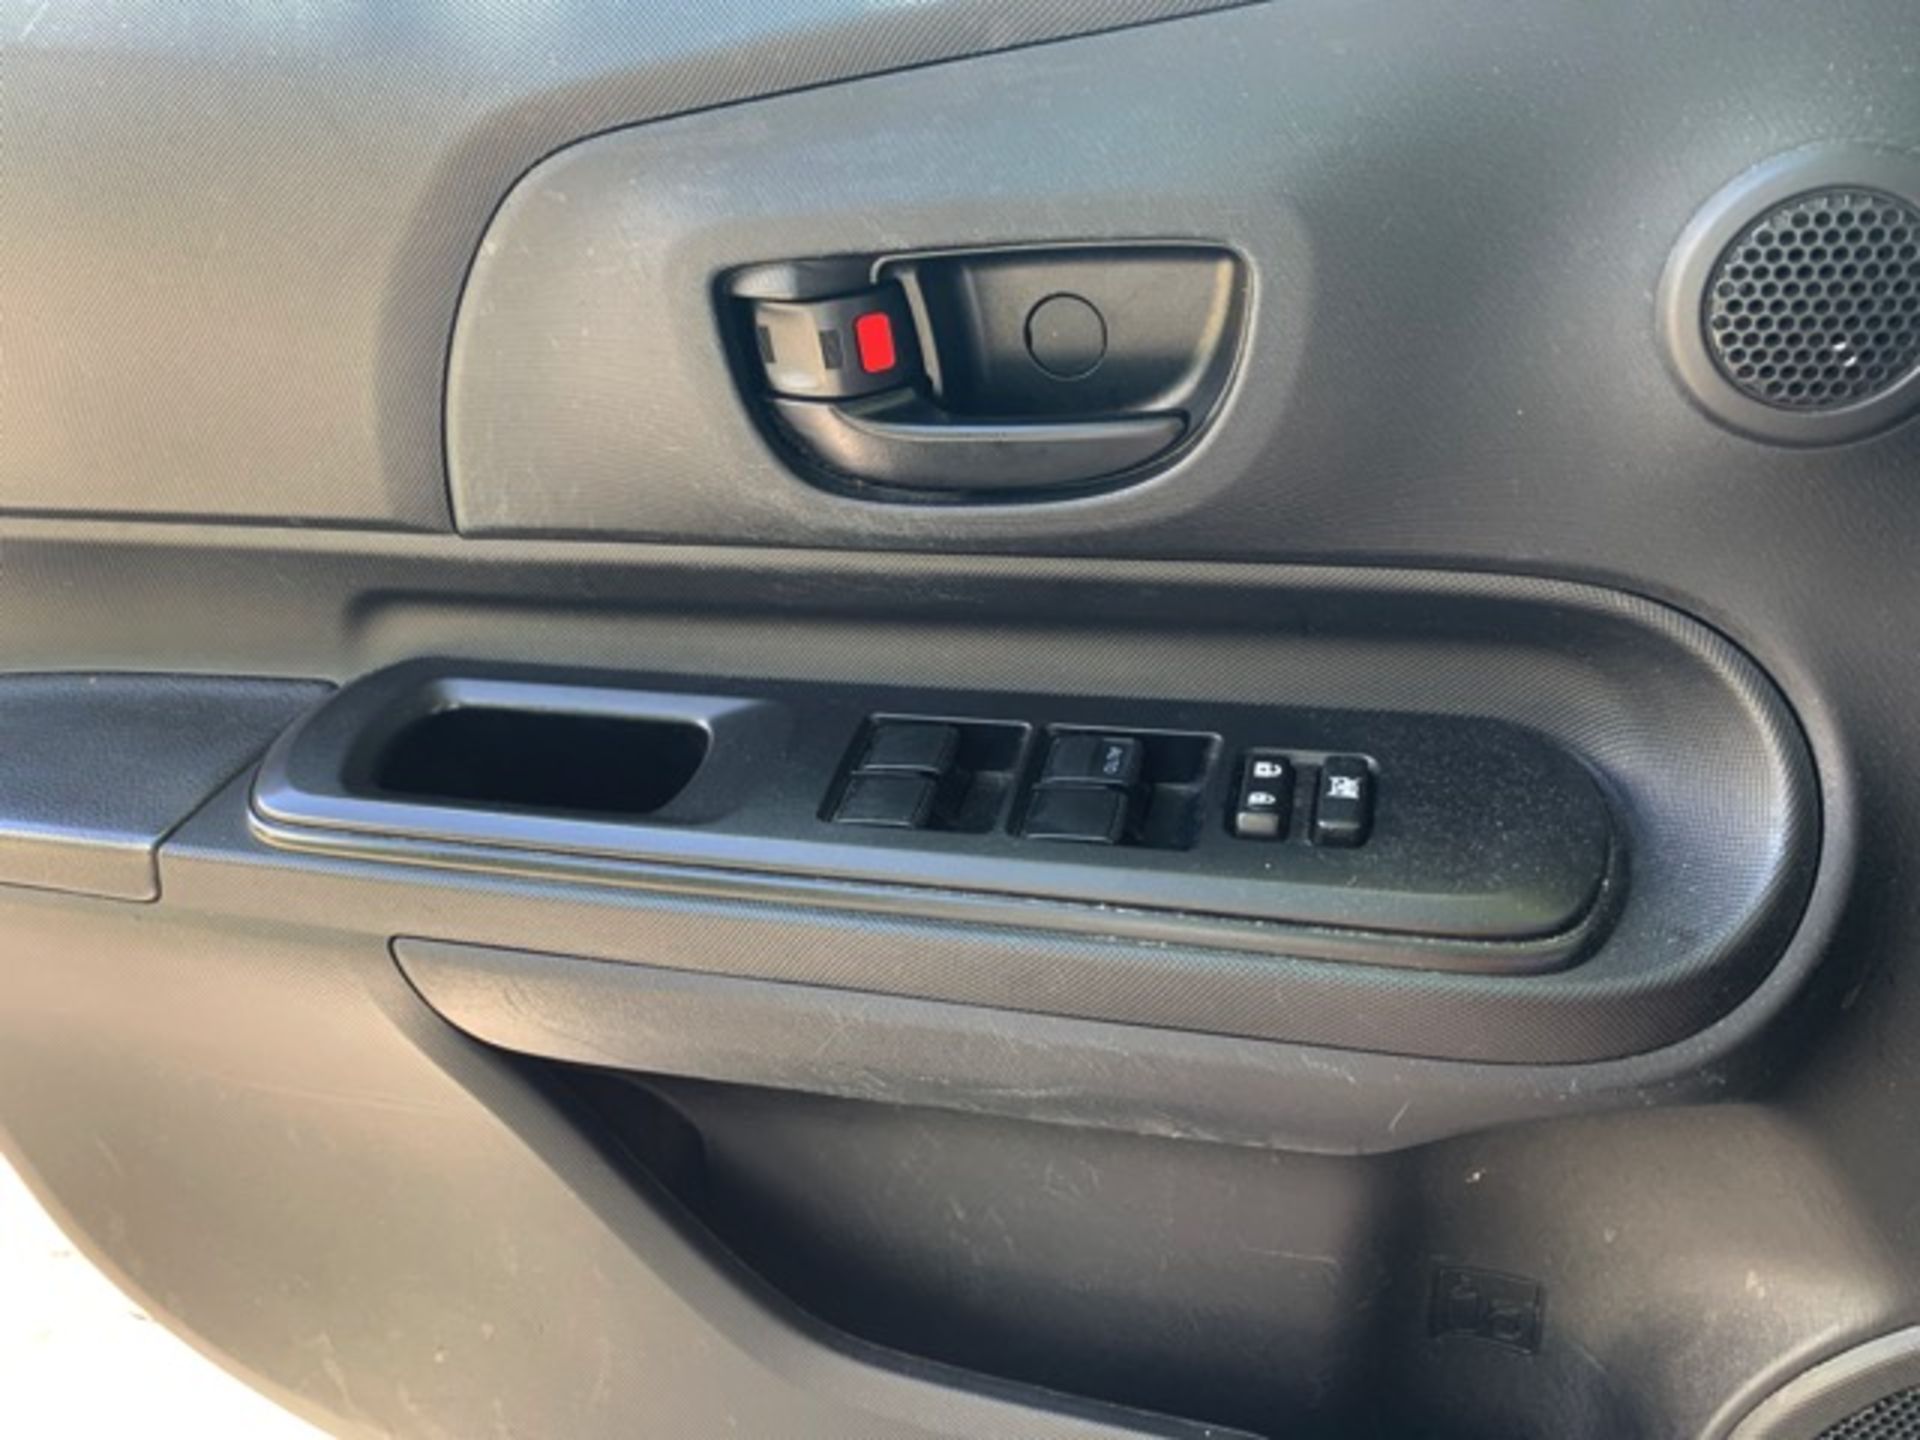 2016 Toyota Prius C, Auto Transmission, L4 1.5 Liter, DOHC 16V, AM/FM CD, Cruise, AC, Power Doors - Image 13 of 14